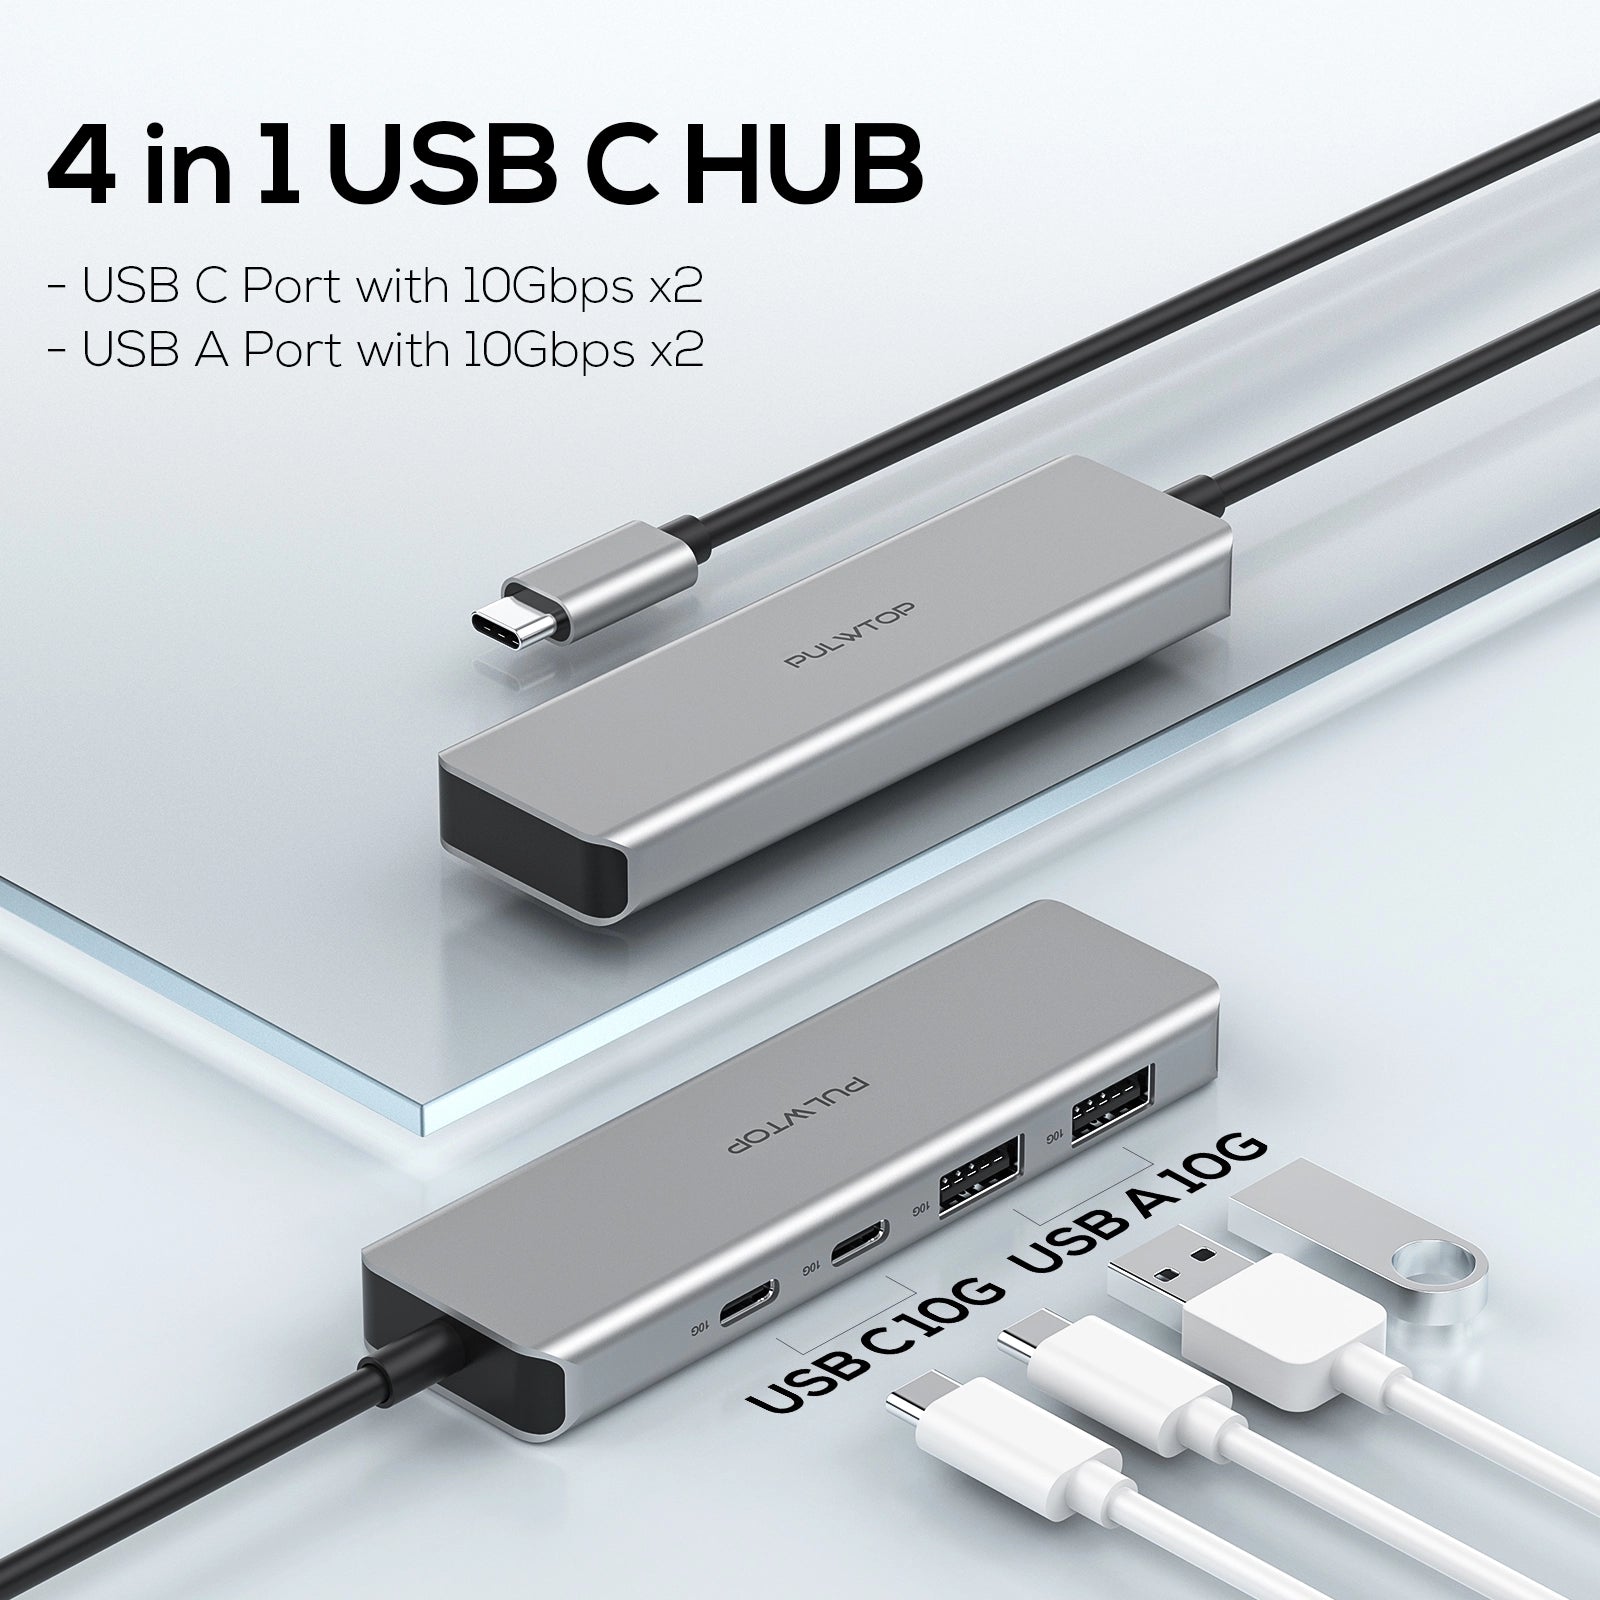 USB C Hub with 10Gbps 4* USB C Ports for Laptop, USB C Splitter USB